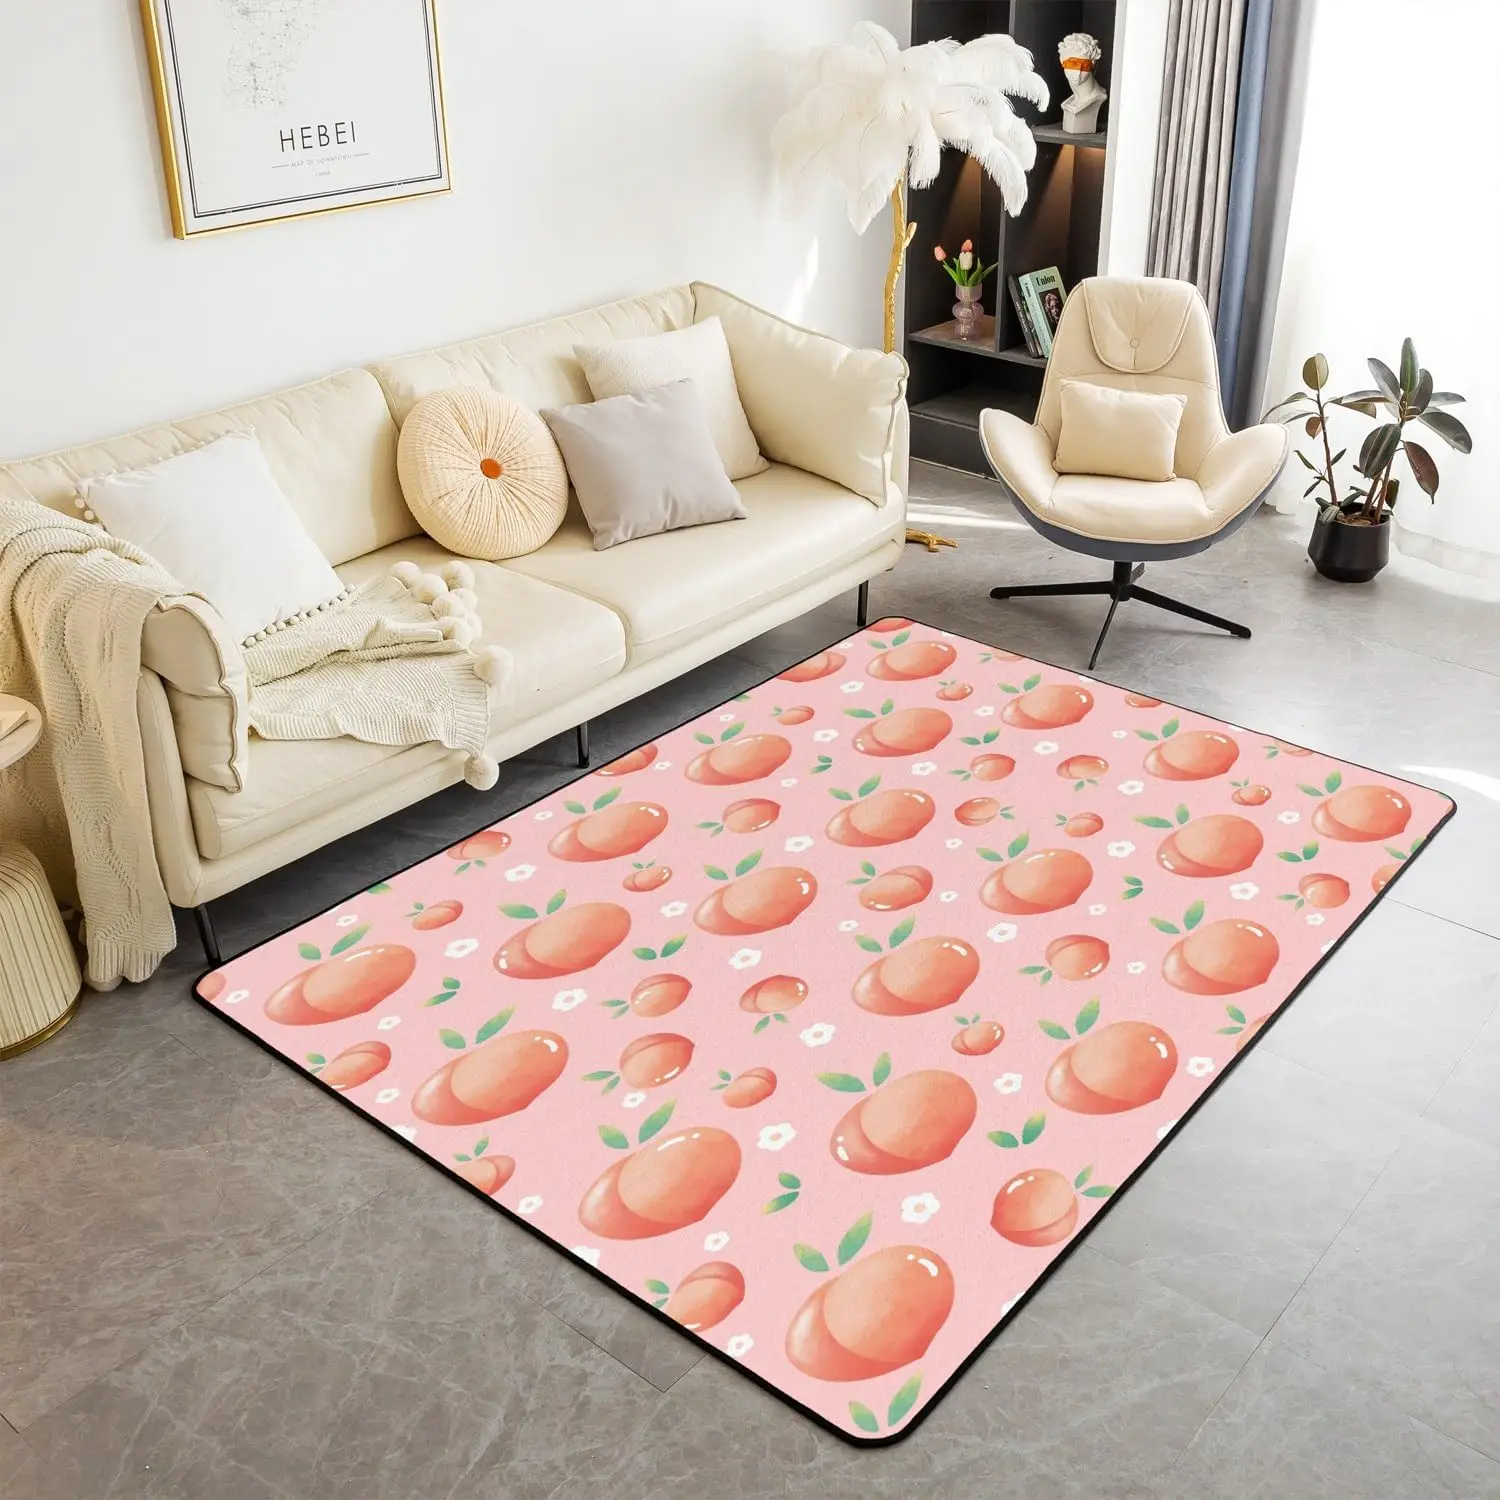 

Cute Summer Fruit Carpet Sweet Peach Print Area Rug for Living Room Bedroom Bathroom Non Slip Kawaii Cartoon Fruits Floor Mat